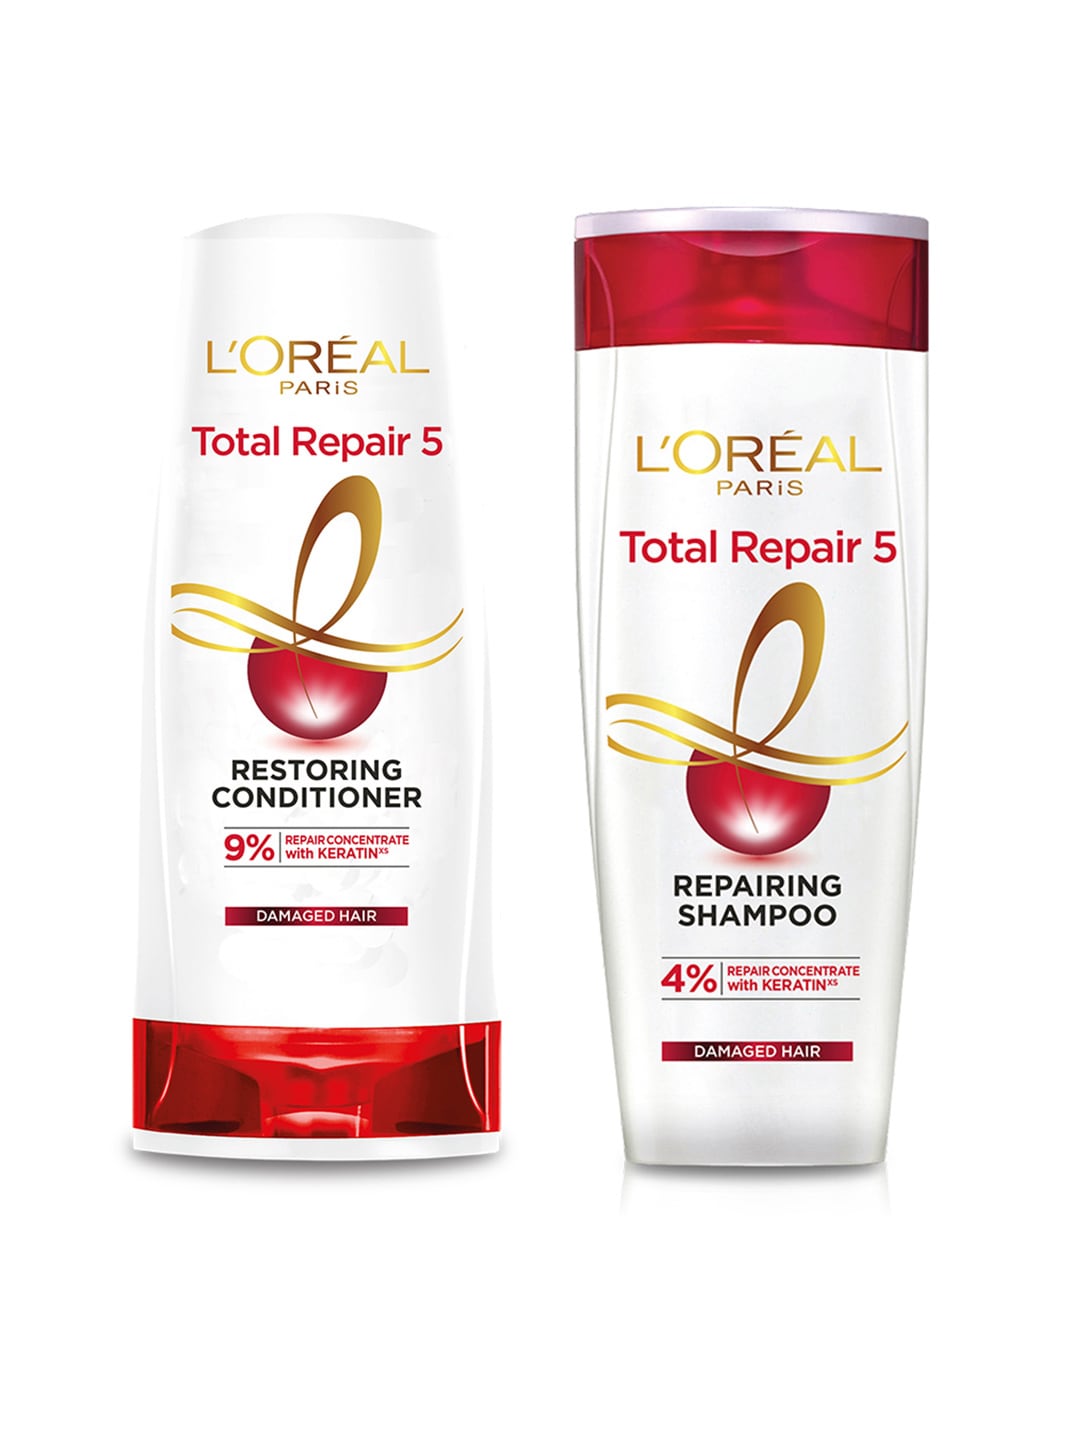 LOreal Paris Set of Total Repair 5 Advanced Repairing Shampoo 360 ml & Conditioner 175 ml Price in India